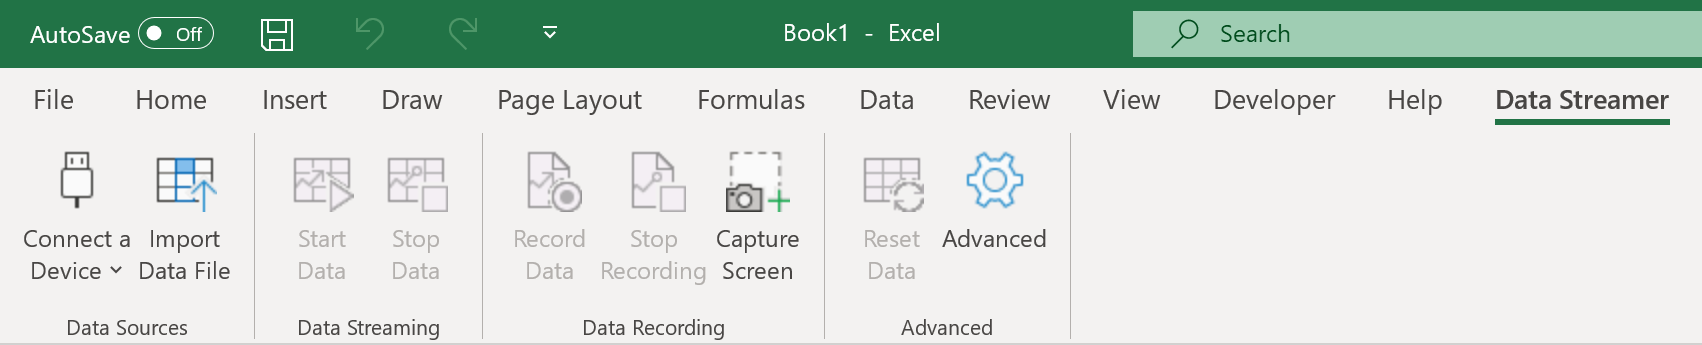 Microsoft Data Streamer for Excel ribbon.